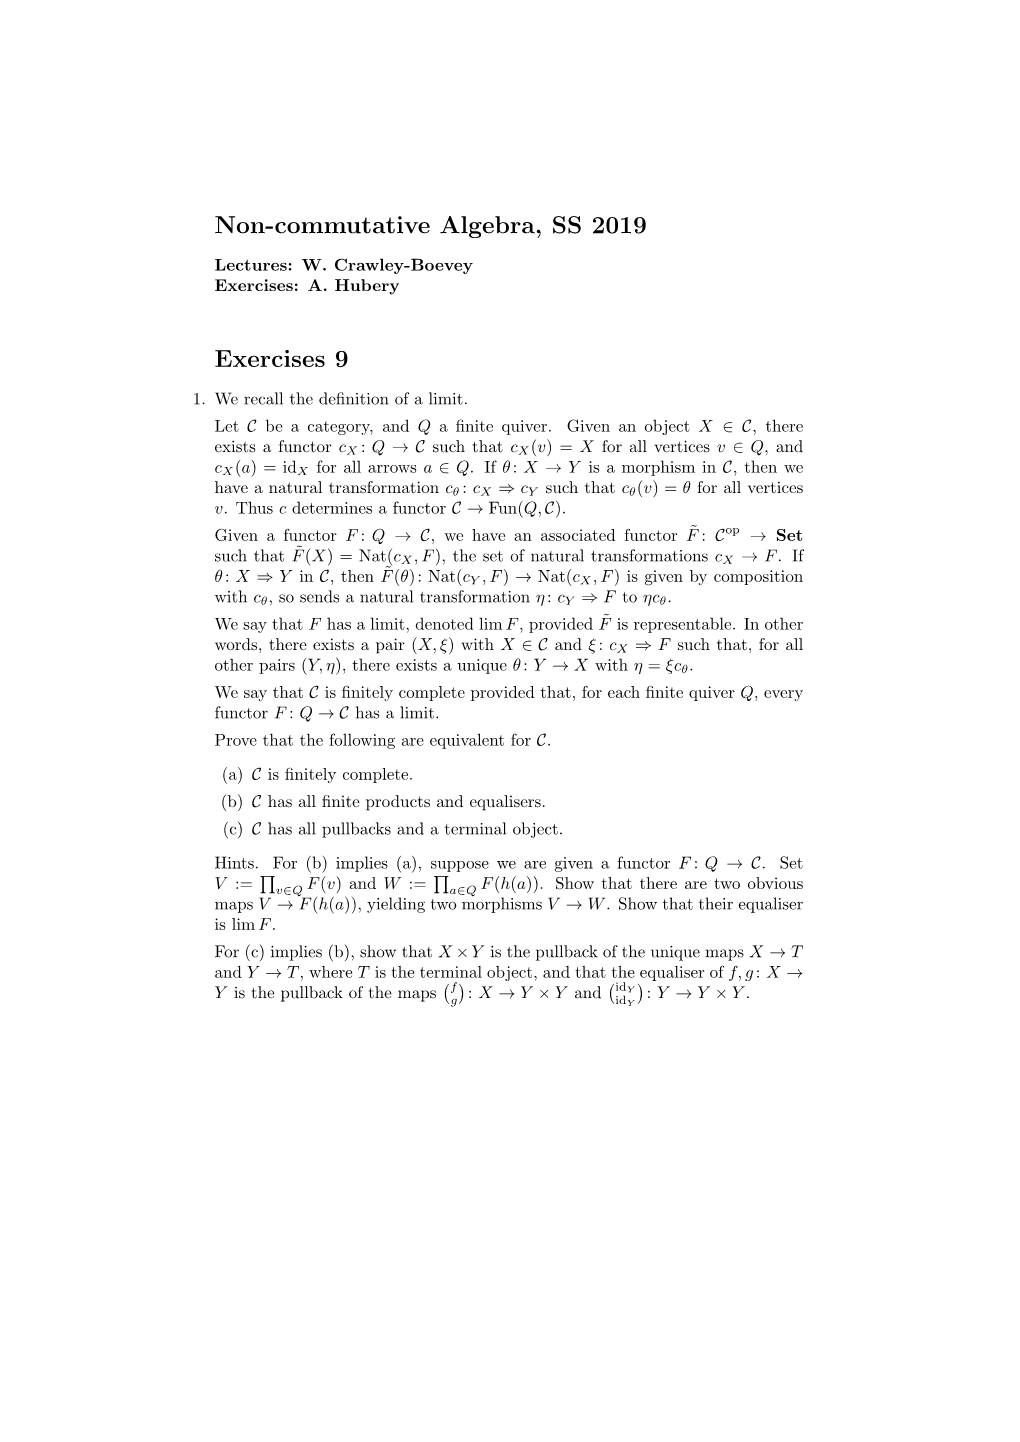 Non-Commutative Algebra, SS 2019 Exercises 9